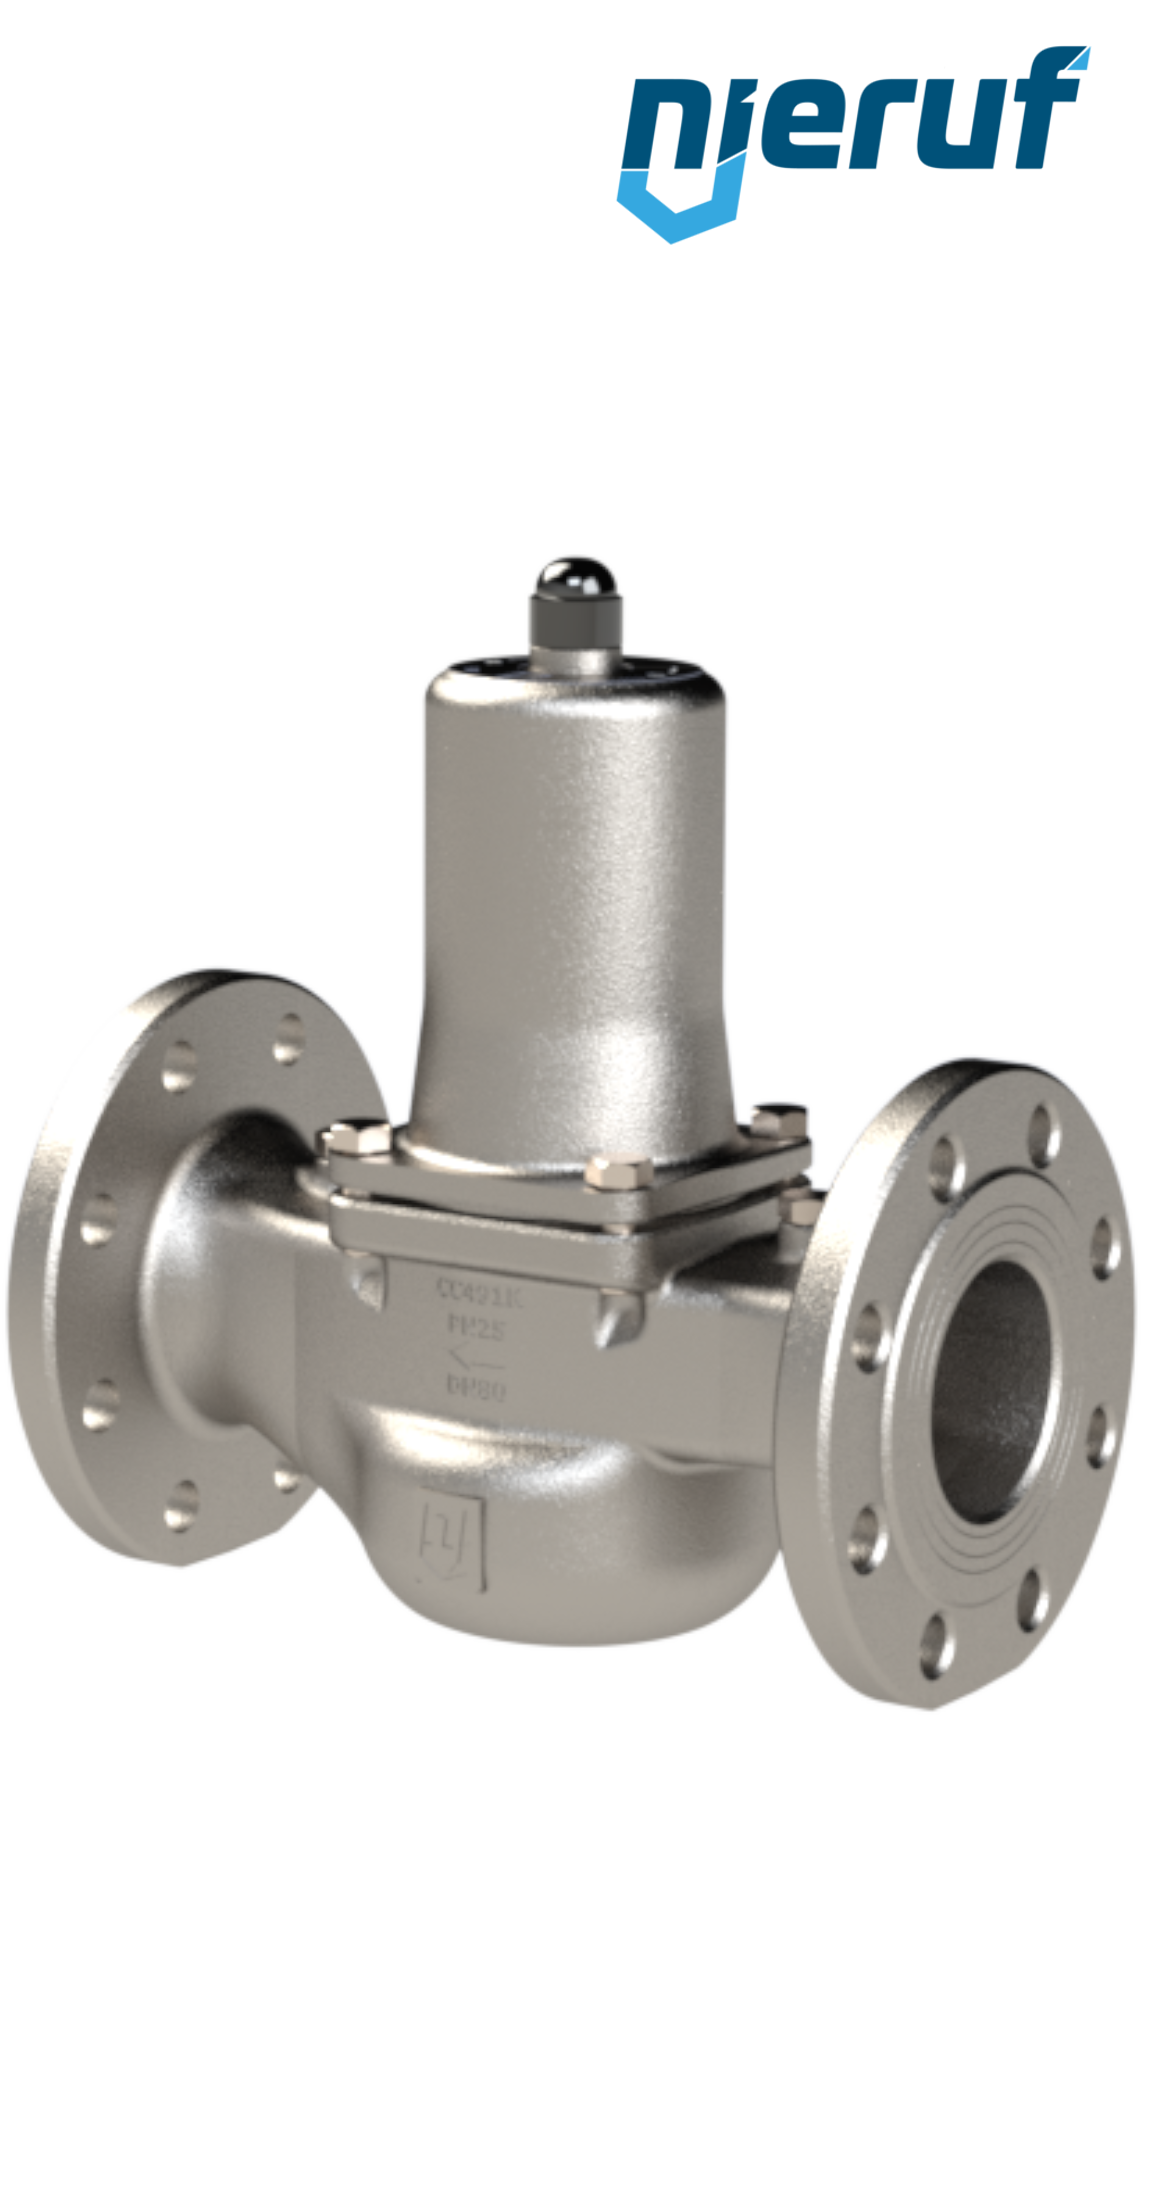 Flange-pressure reducing valve DN 65 PN40 DM08 stainless steel FKM 1.0 - 8.0 bar